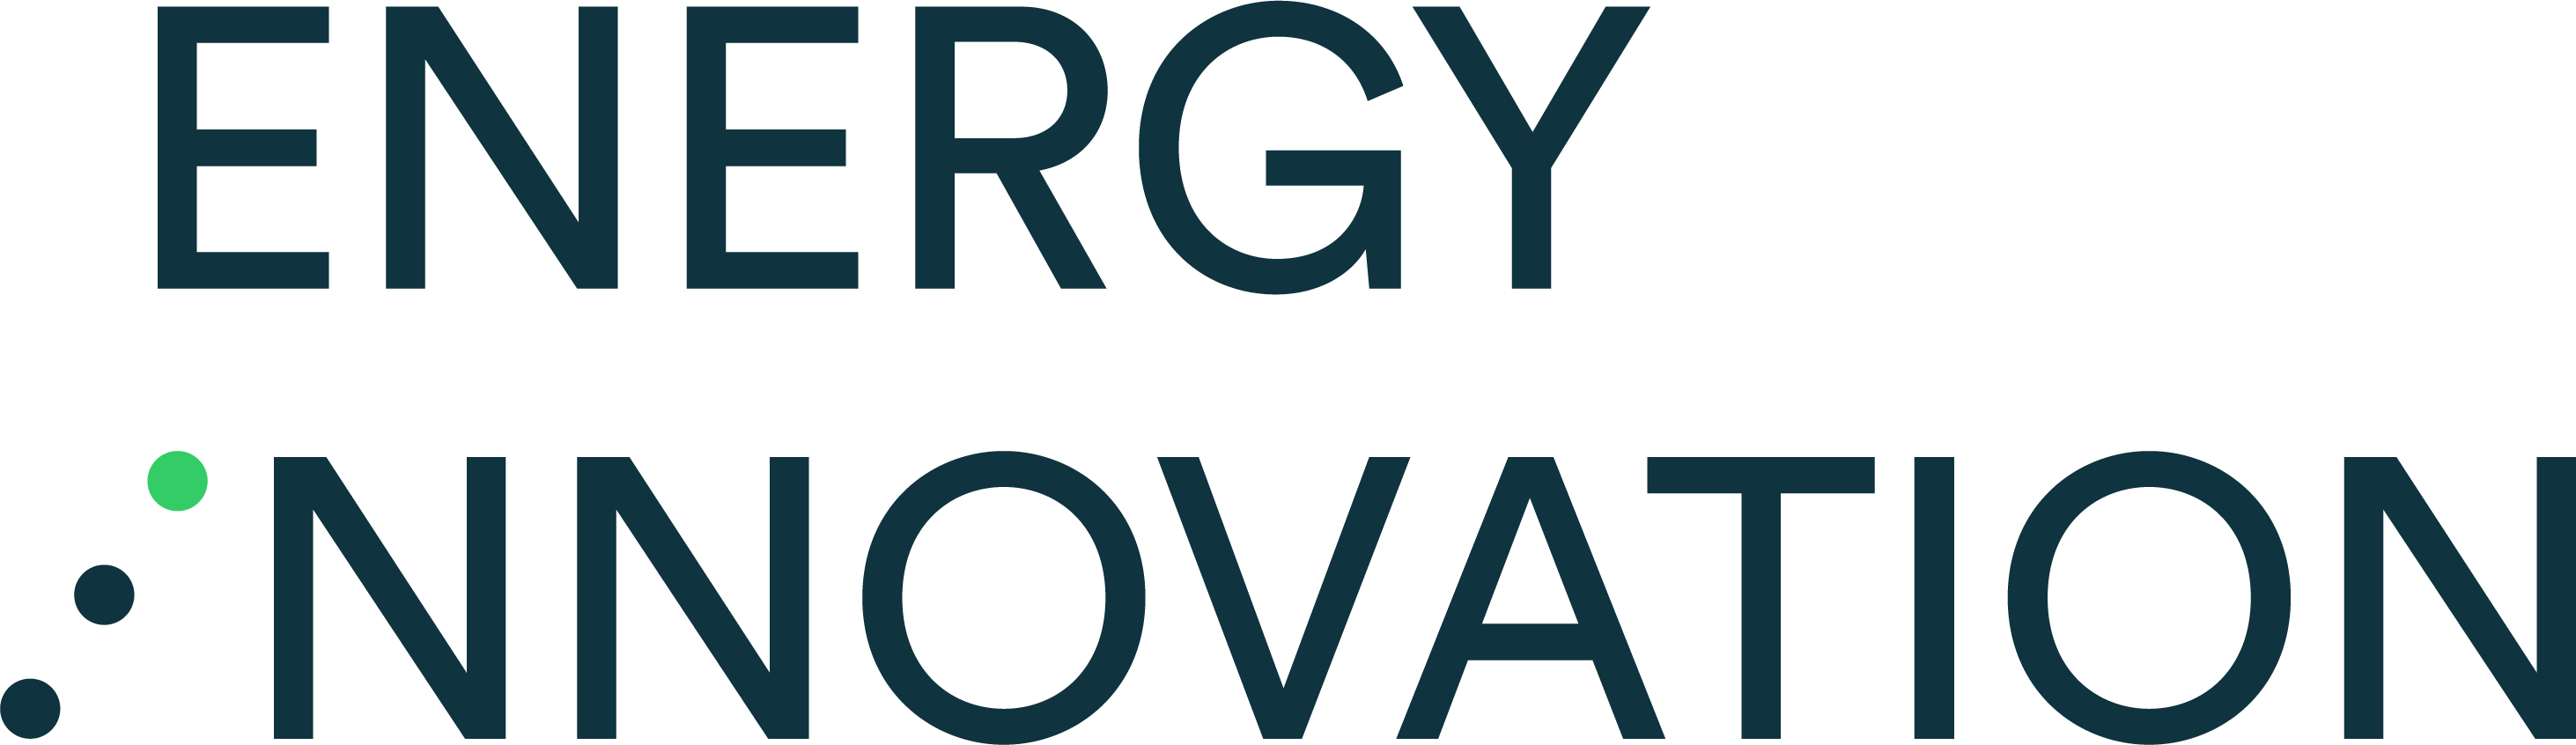 Energy-Innovation_logo_positive